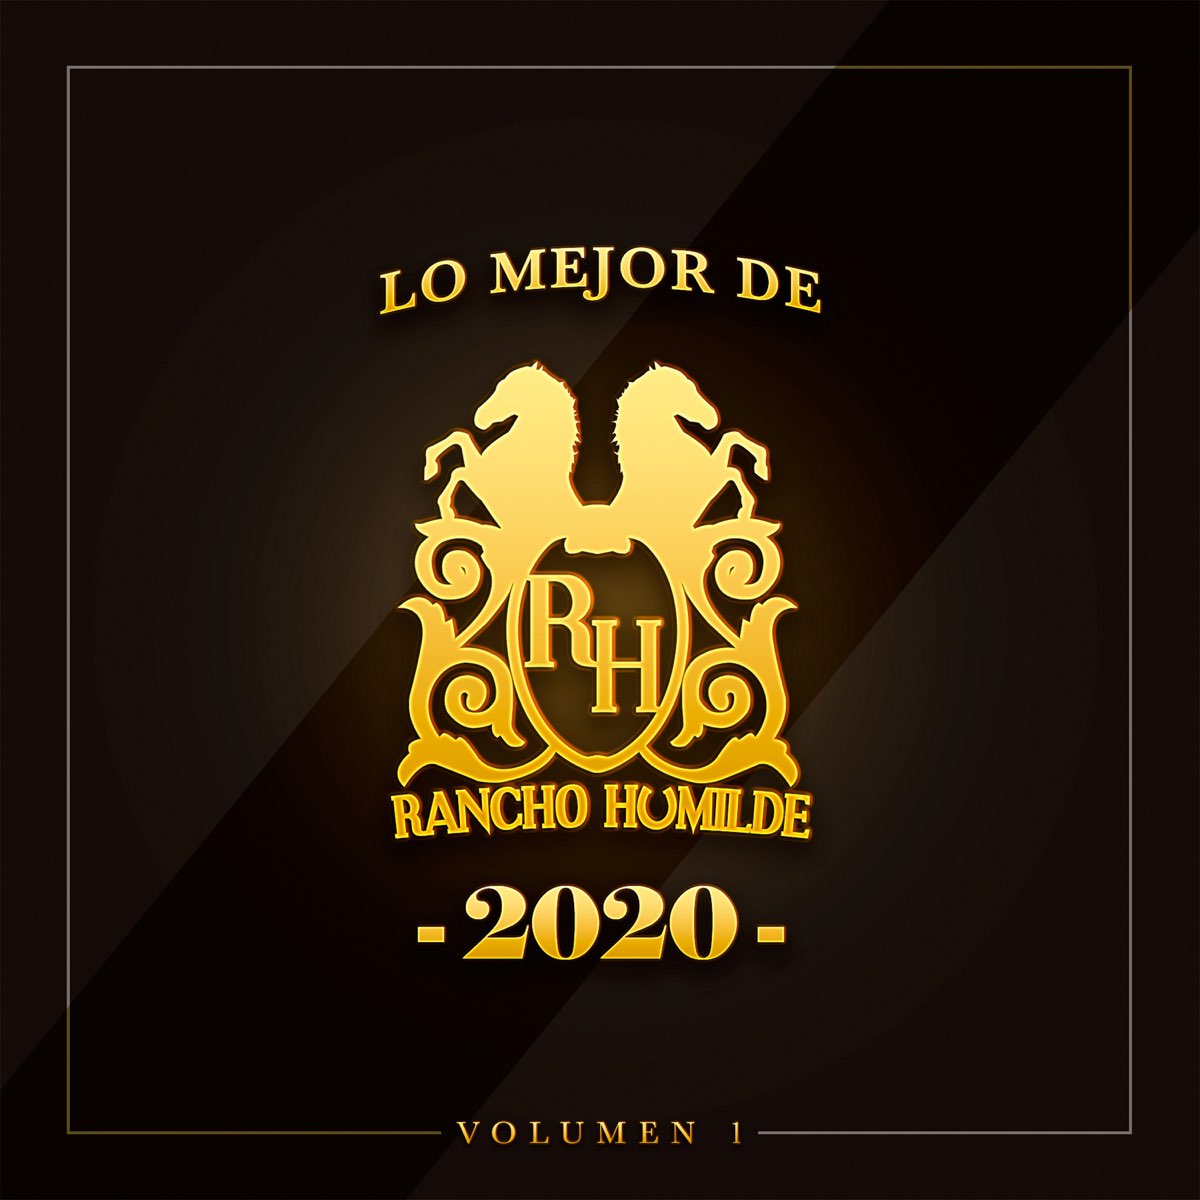 ‎Lo Mejor de Rancho Humilde 2020 Volumen 1 by Jimmy Humilde on Apple Music